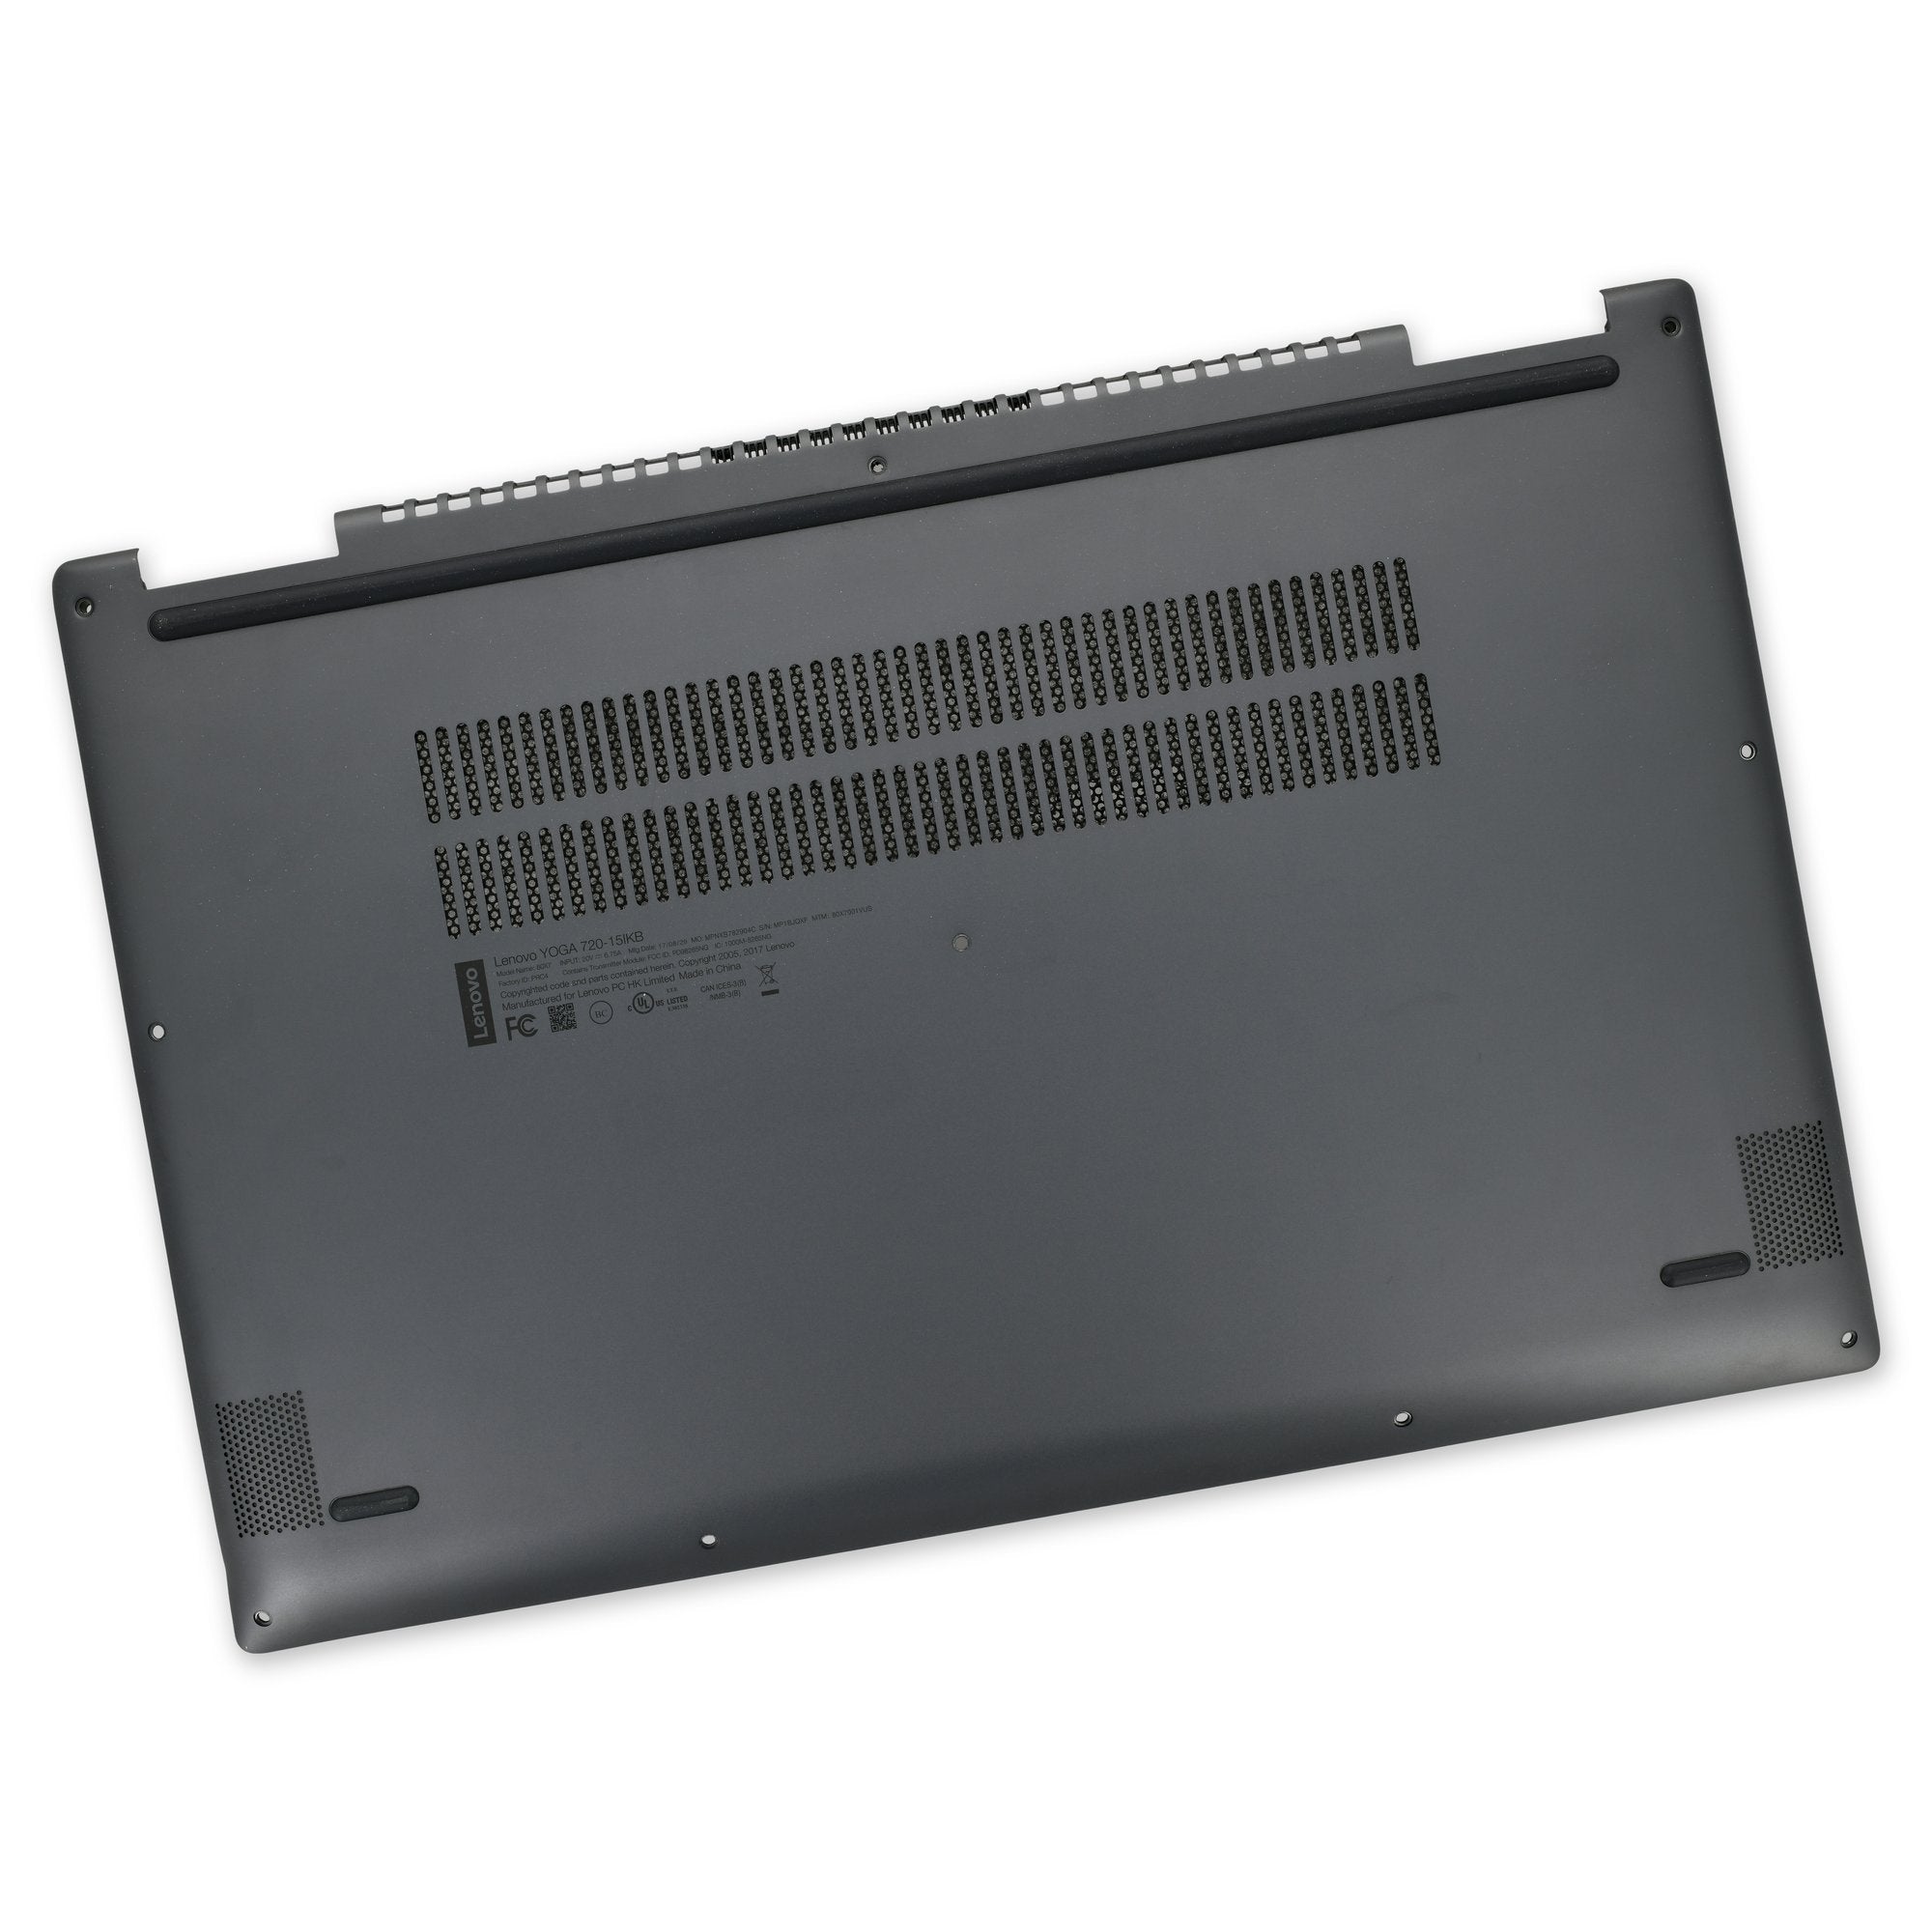 Lenovo IdeaPad Yoga 720-15 Lower Case